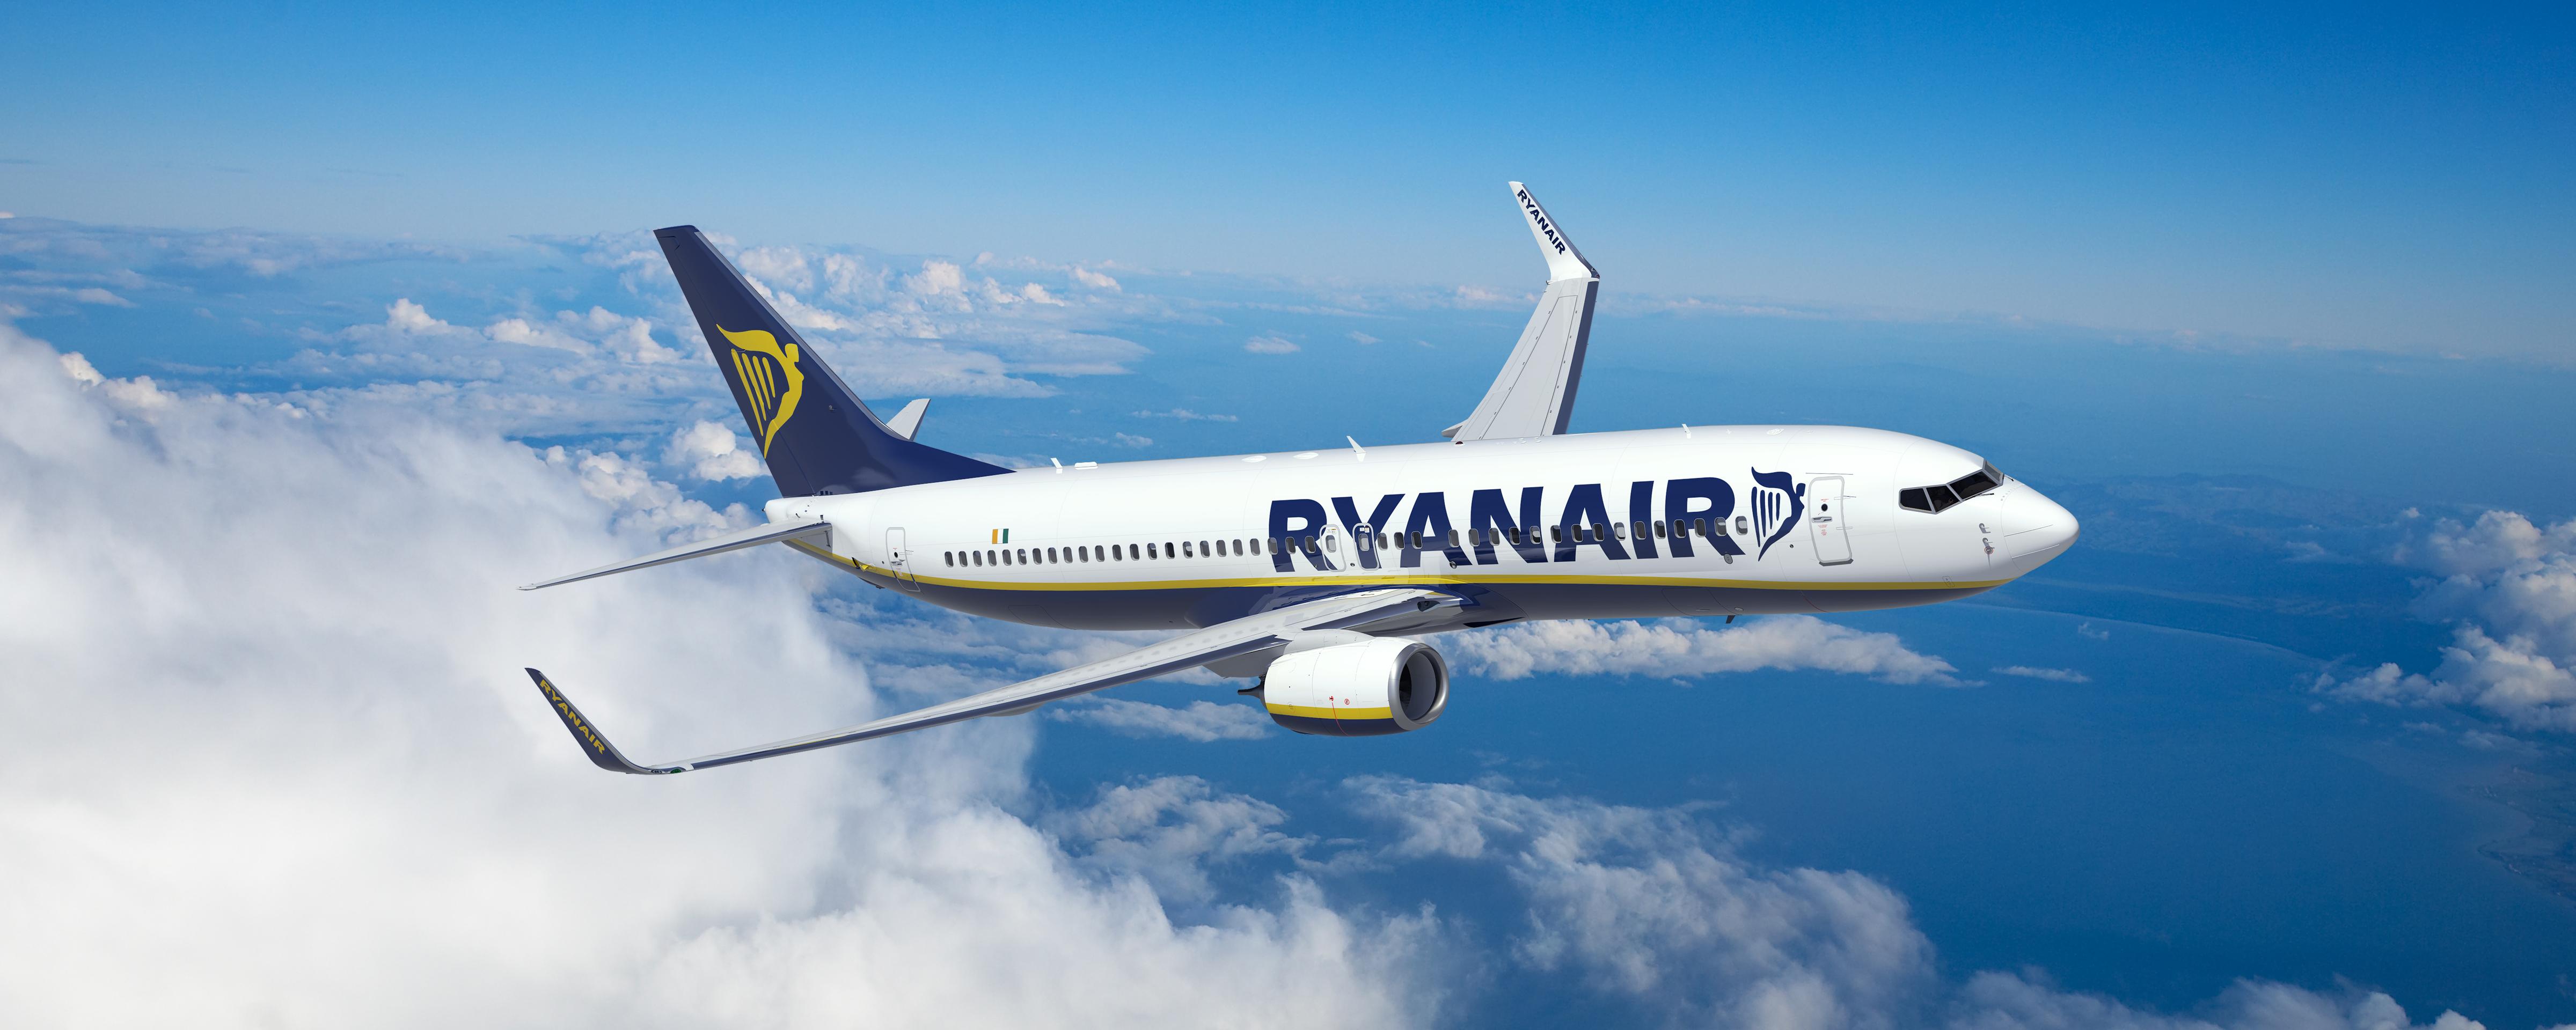 Ryanair’s Low Fares Come To Lebanon